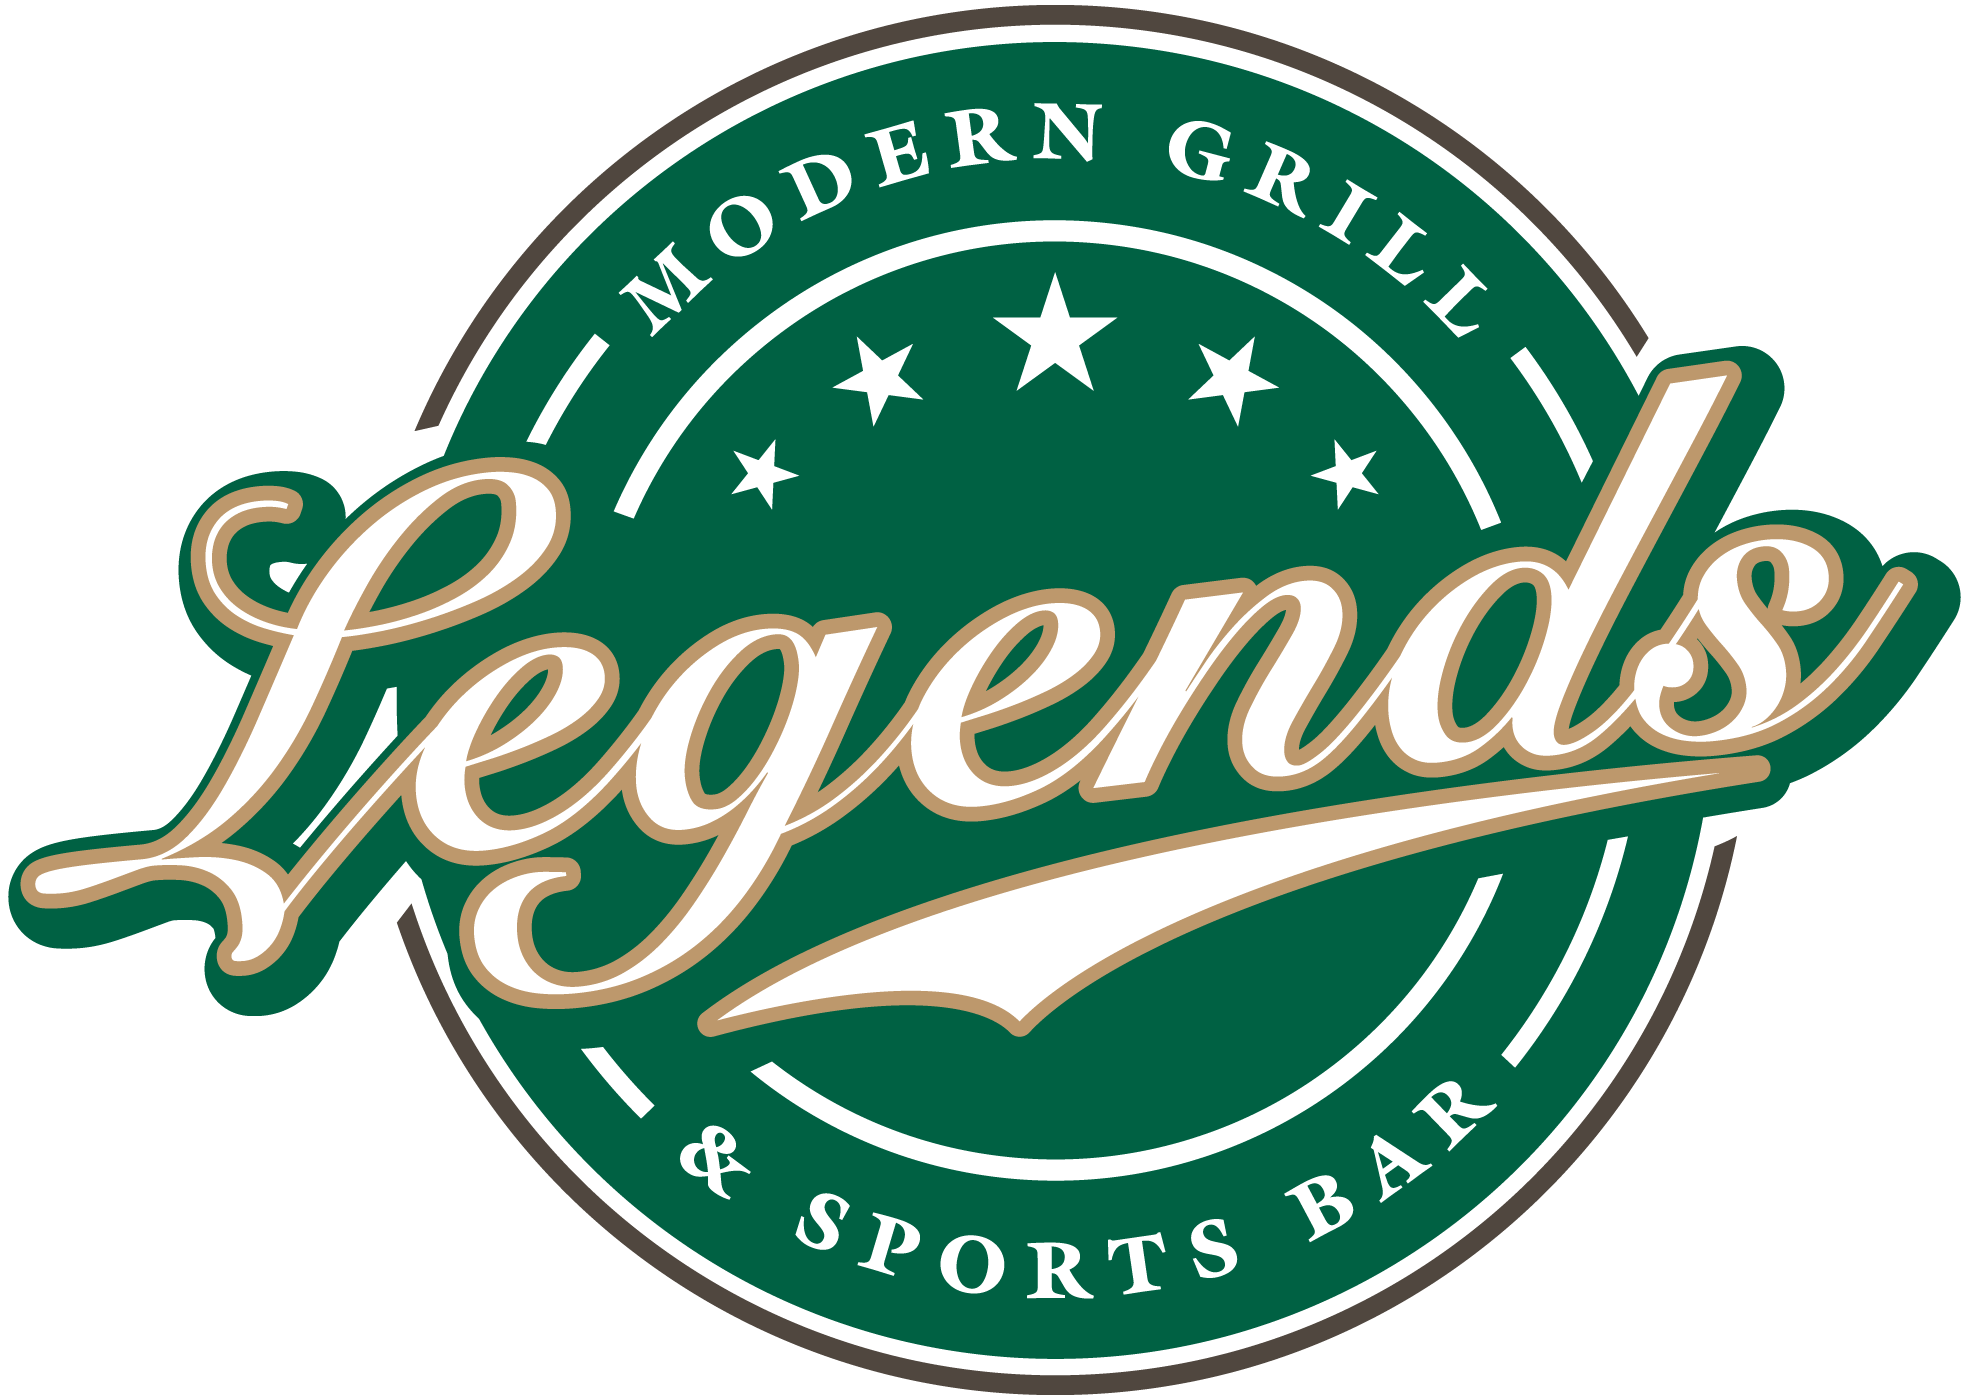 Legends Sports Bar & Grill Video Tour and Menu